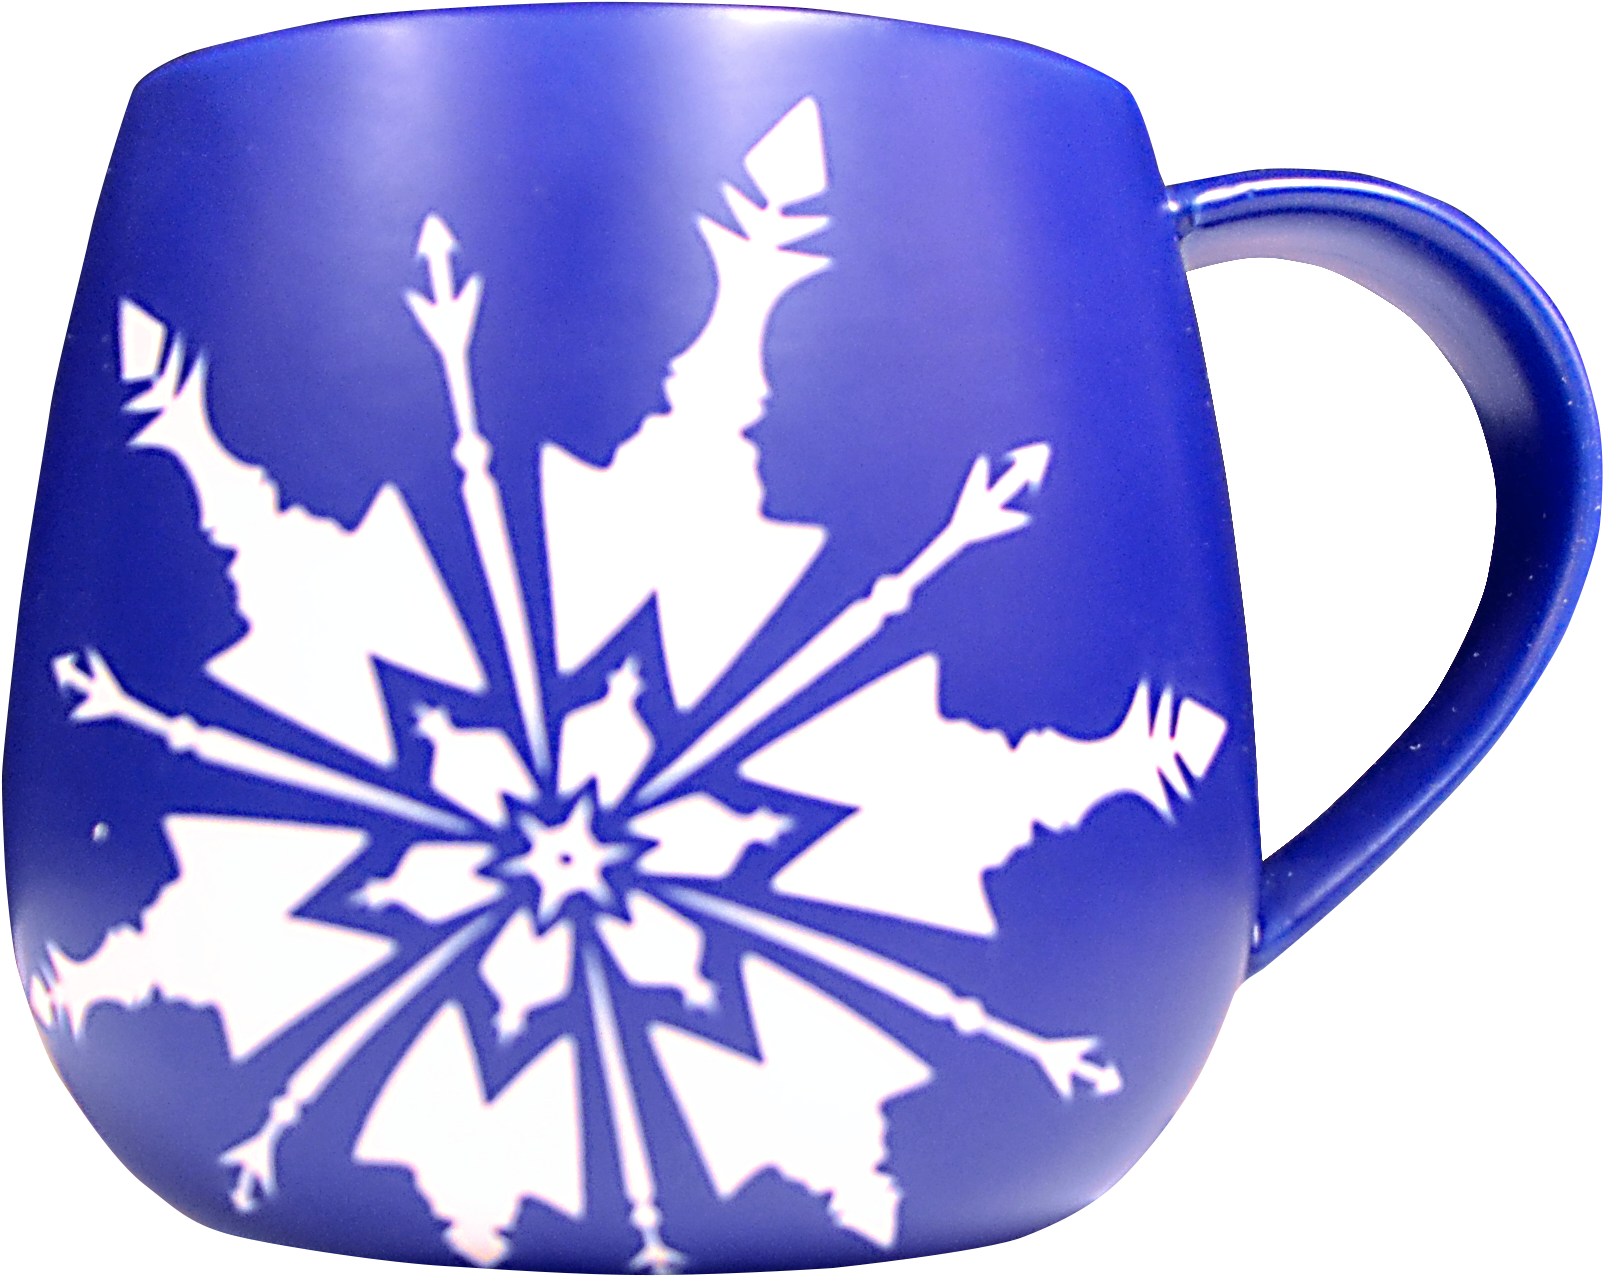 A Blue Mug With A White Snowflake Design